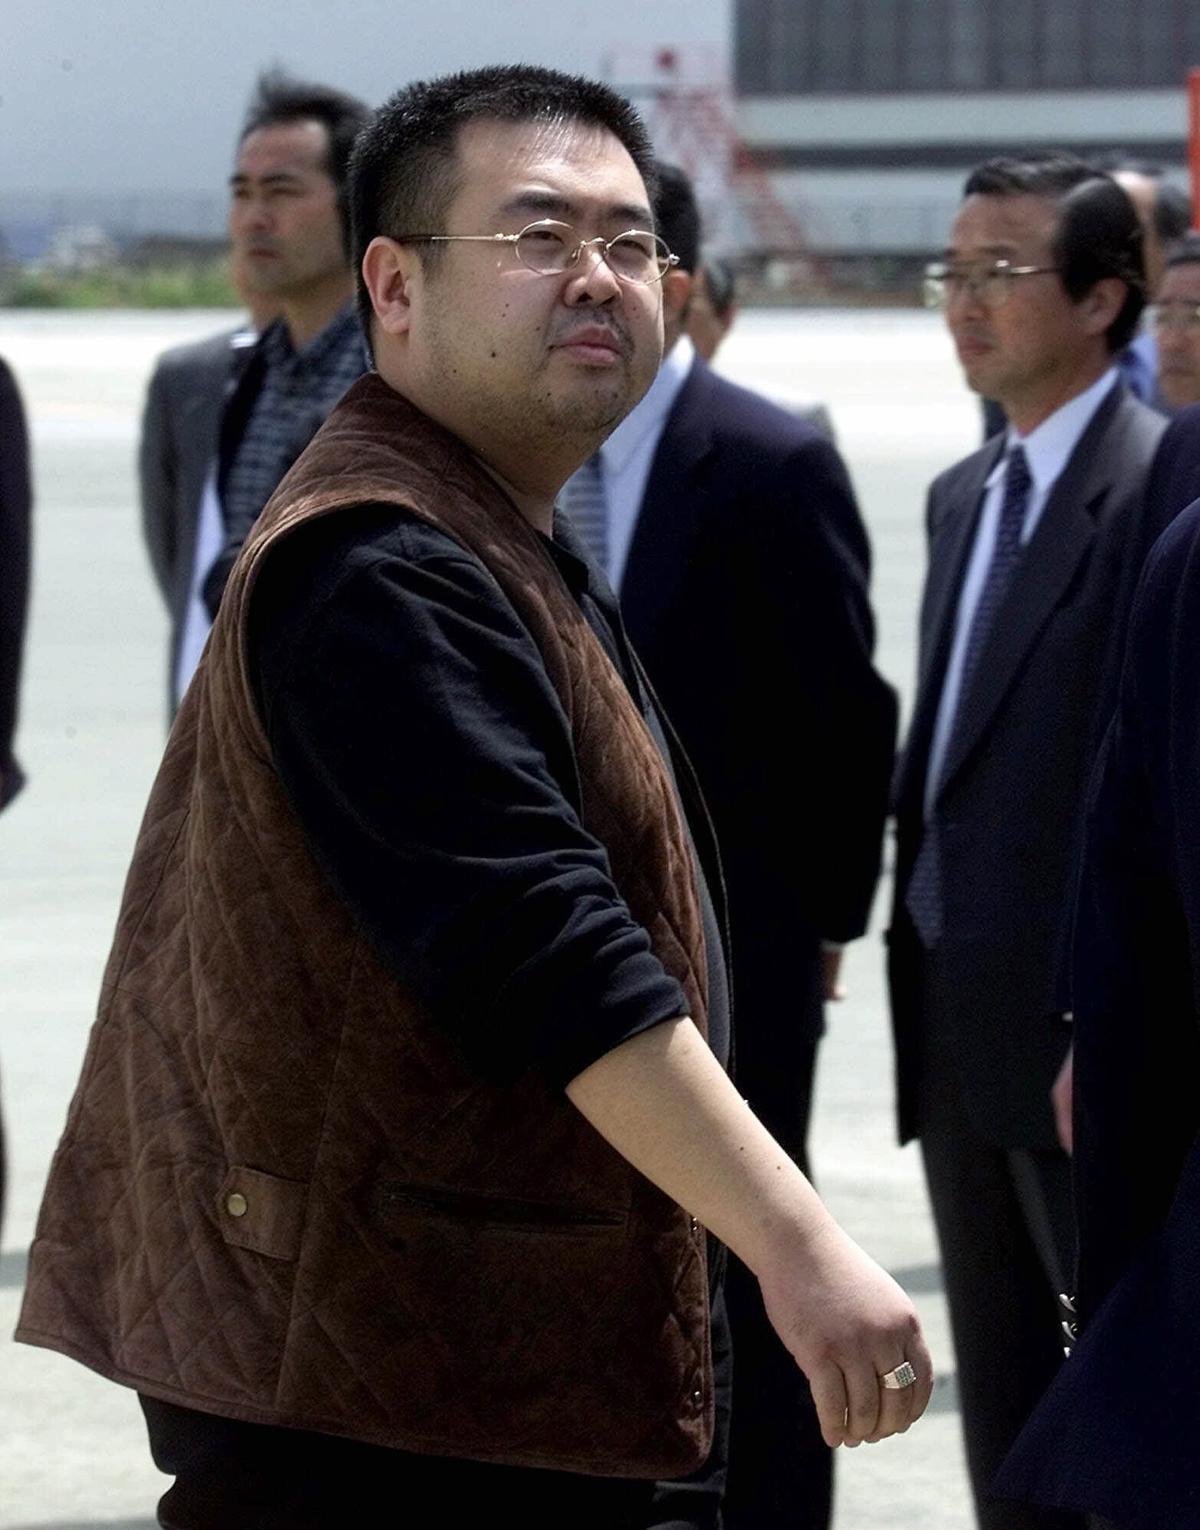 A man believed to be Kim Jong Nam, the eldest son of then North Korean leader Kim Jong Il. (AP Photo/Shizuo Kambayashi)